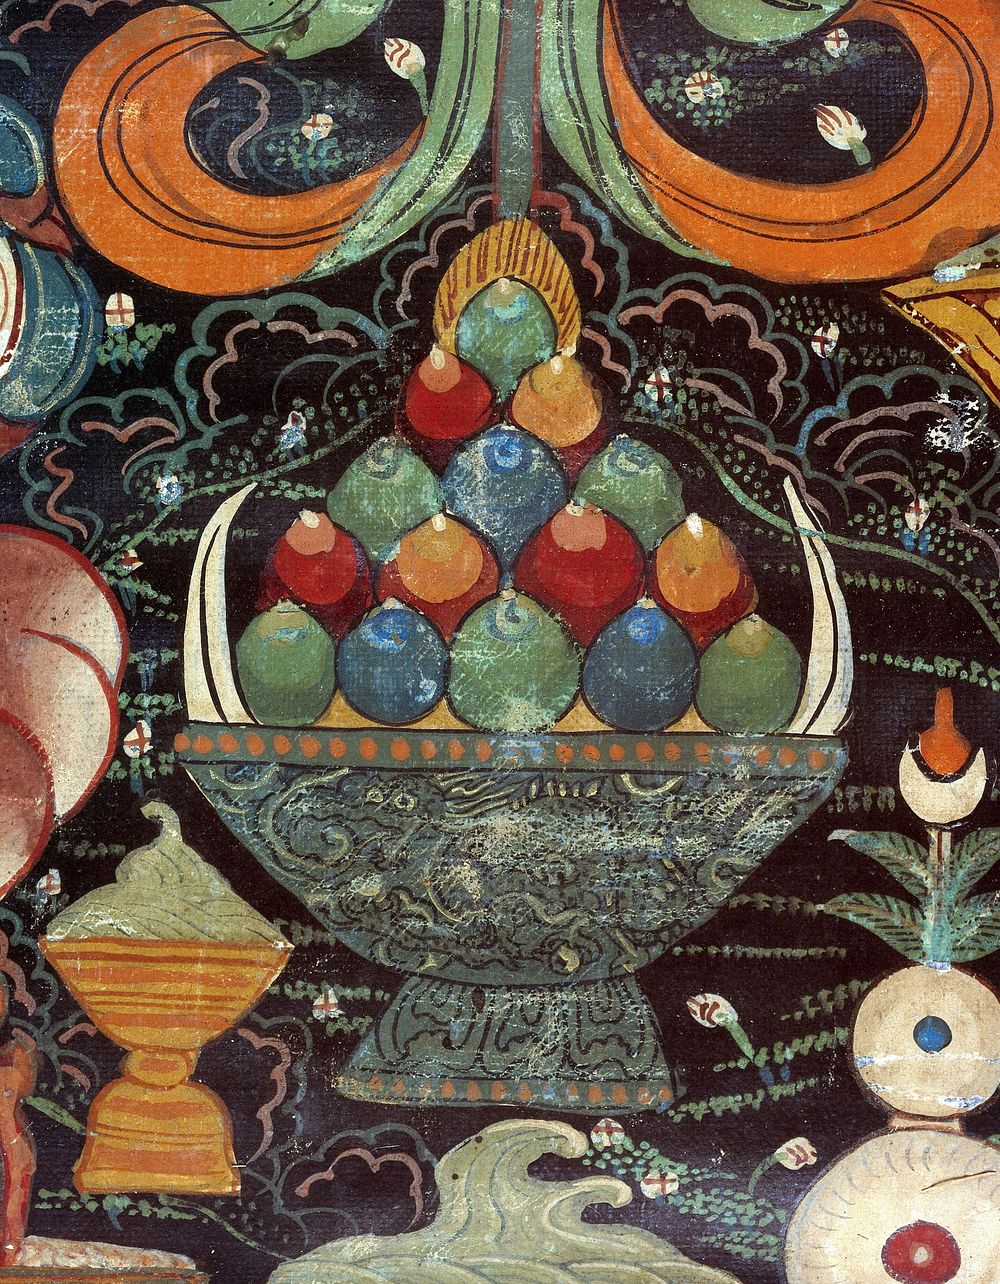 Attributes of rDo-rje Kon-btsun De-mo in a "rgyan tshogs" banner. Distemper painting by a Tibetan painter.